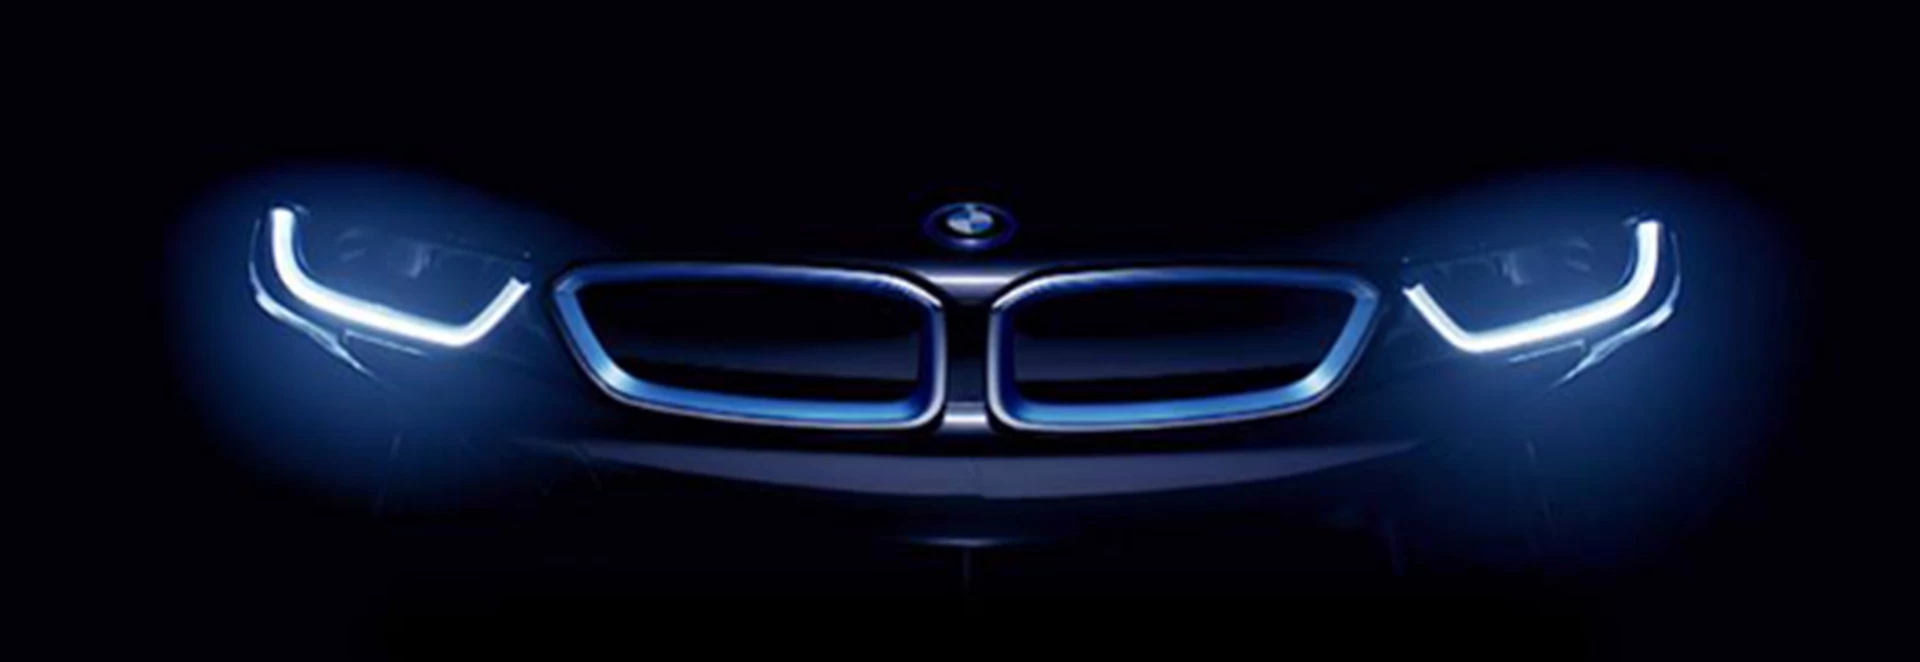 BMW celebrates 100th anniversary, teases new model